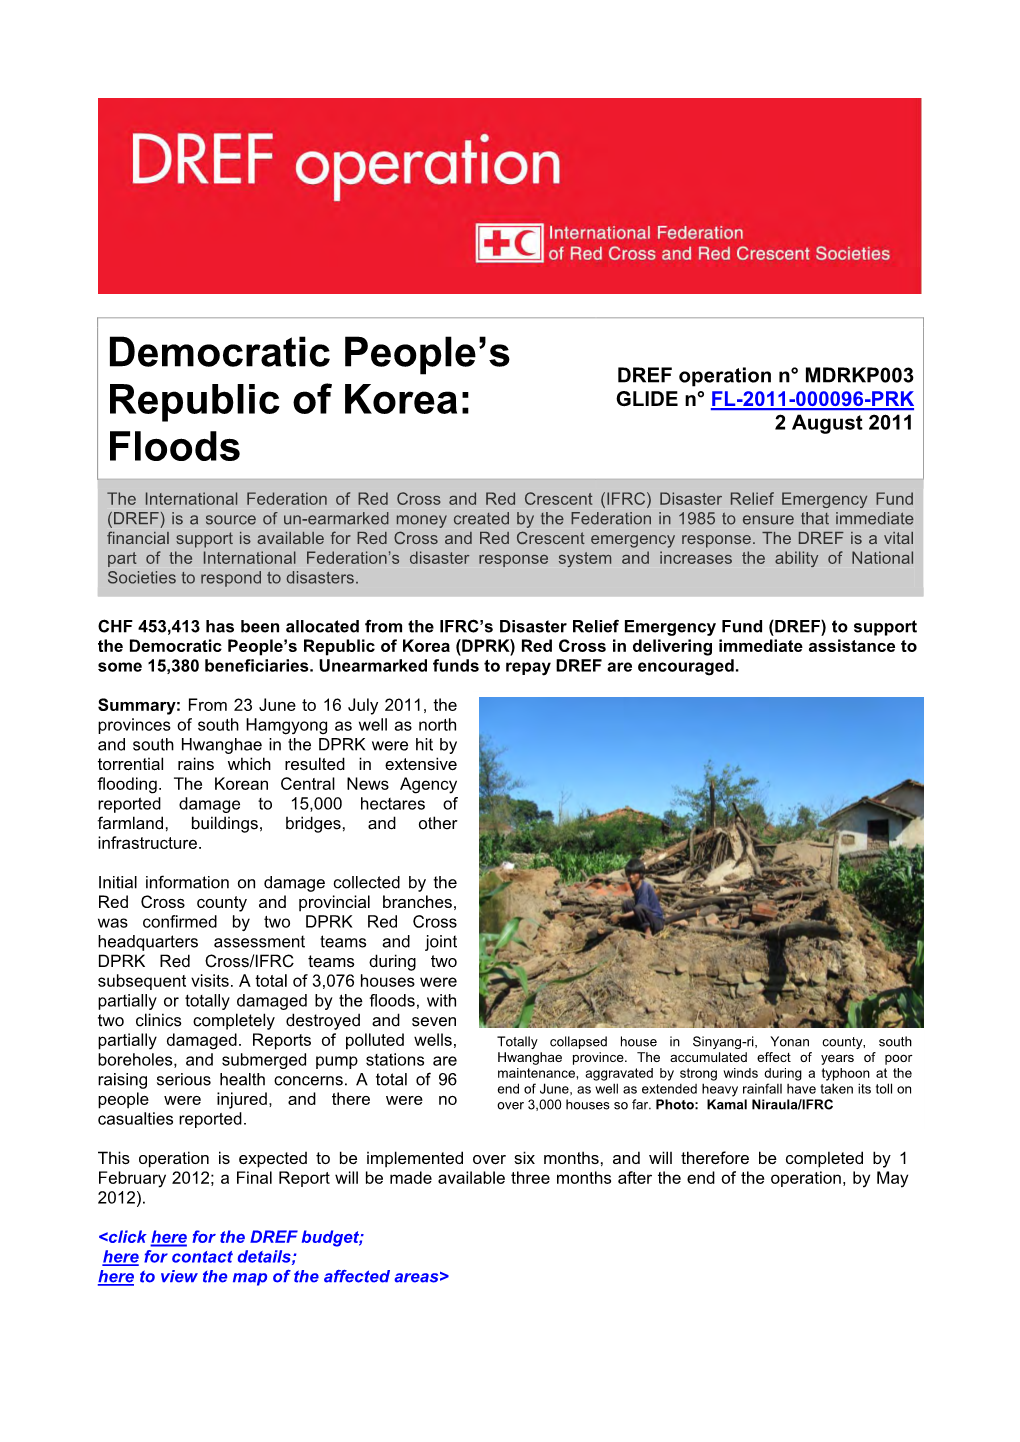 Democratic People's Republic of Korea: Floods